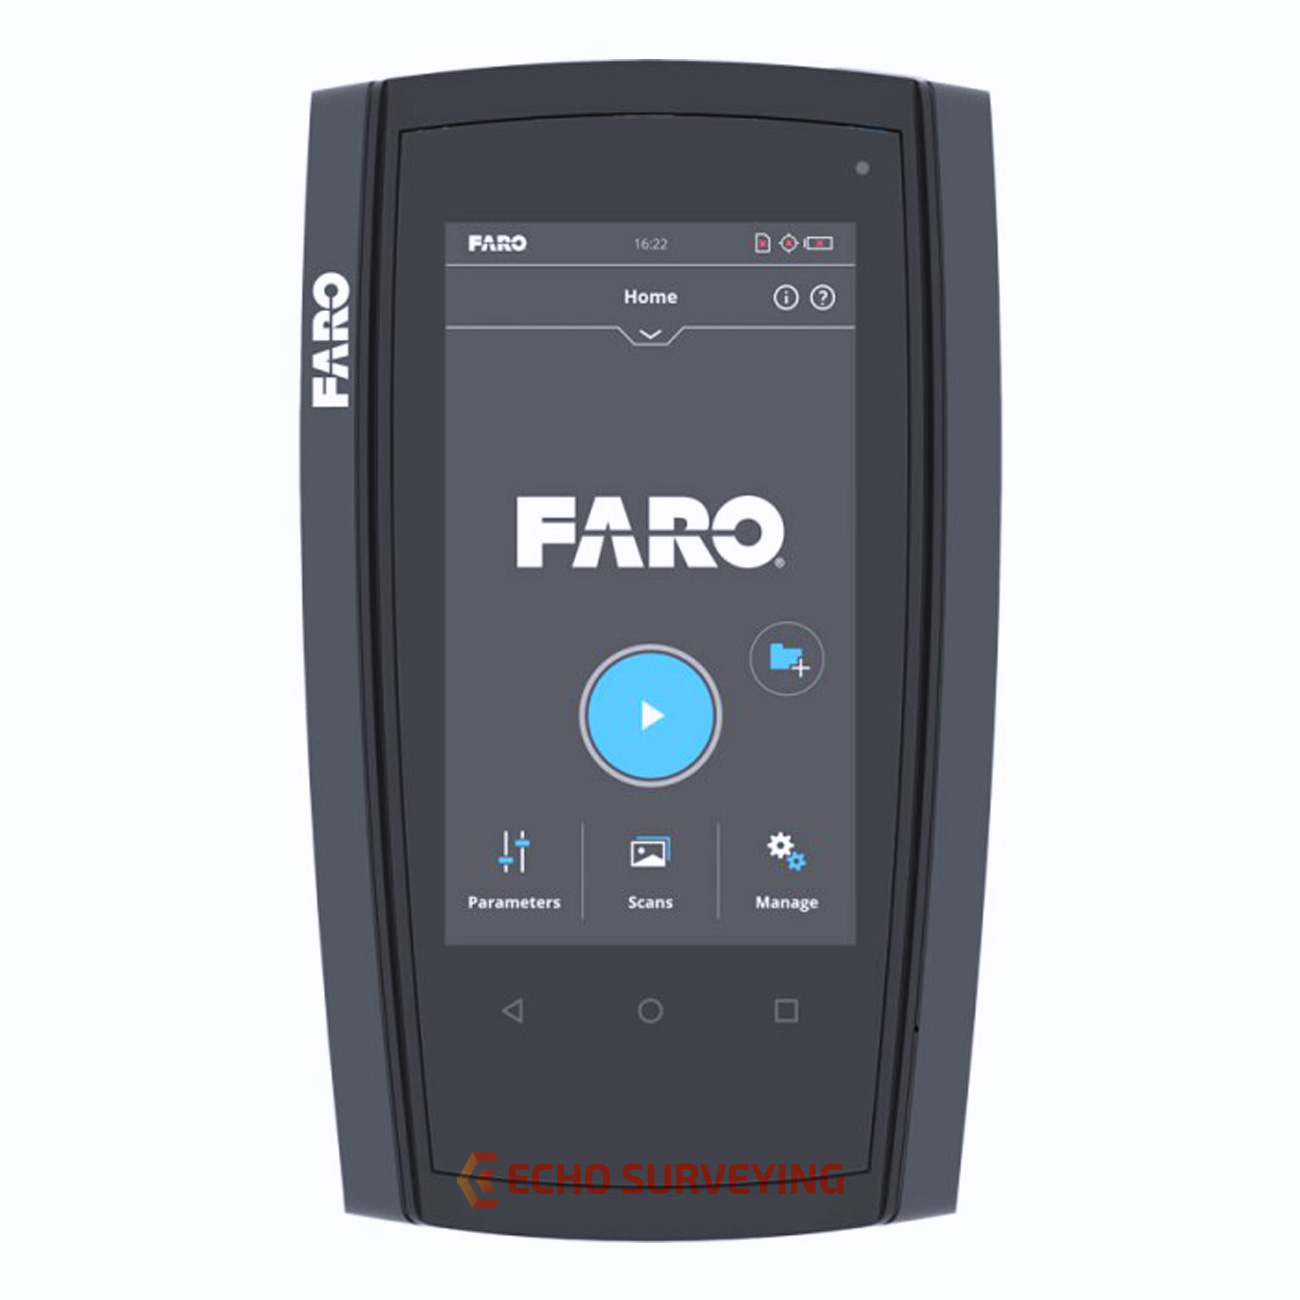 Faro-Focus-S150-price.jpg